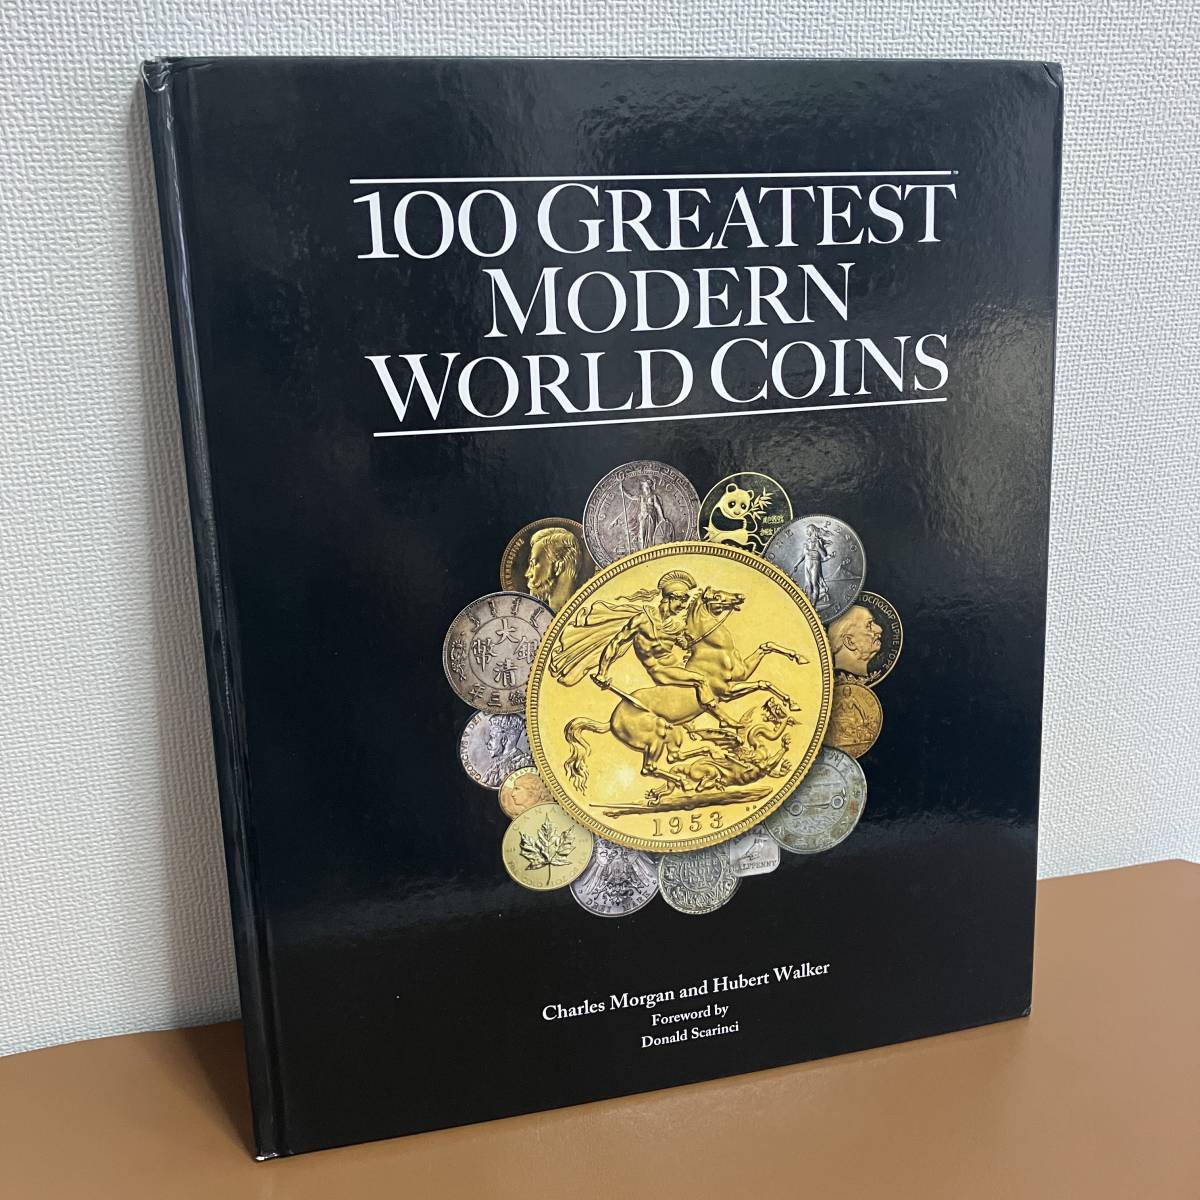  монета  связь ... 100  серый   тест  *   современный  *  ... *   монета ... / 100 GREATEST MODERN WORLD COINS